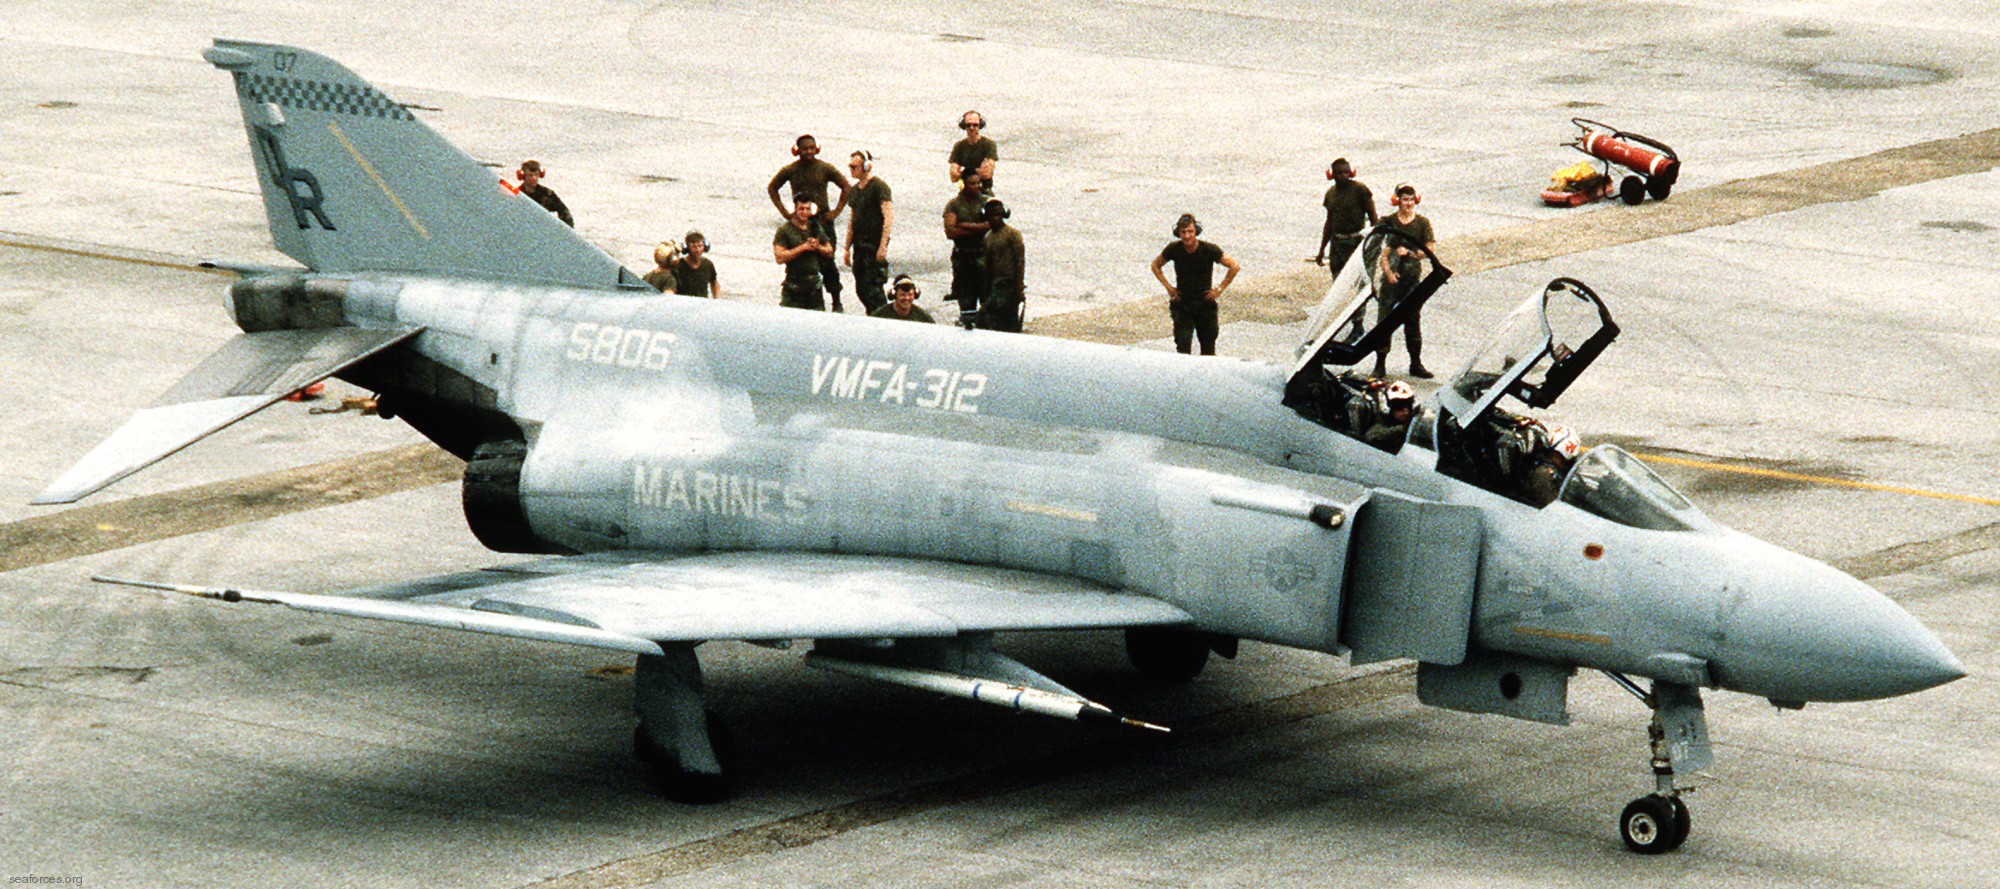 vmfa-312 checkerboards marine fighter attack squadron usmc f-4s phantom ii exercise agine sword nas pensacola 1986